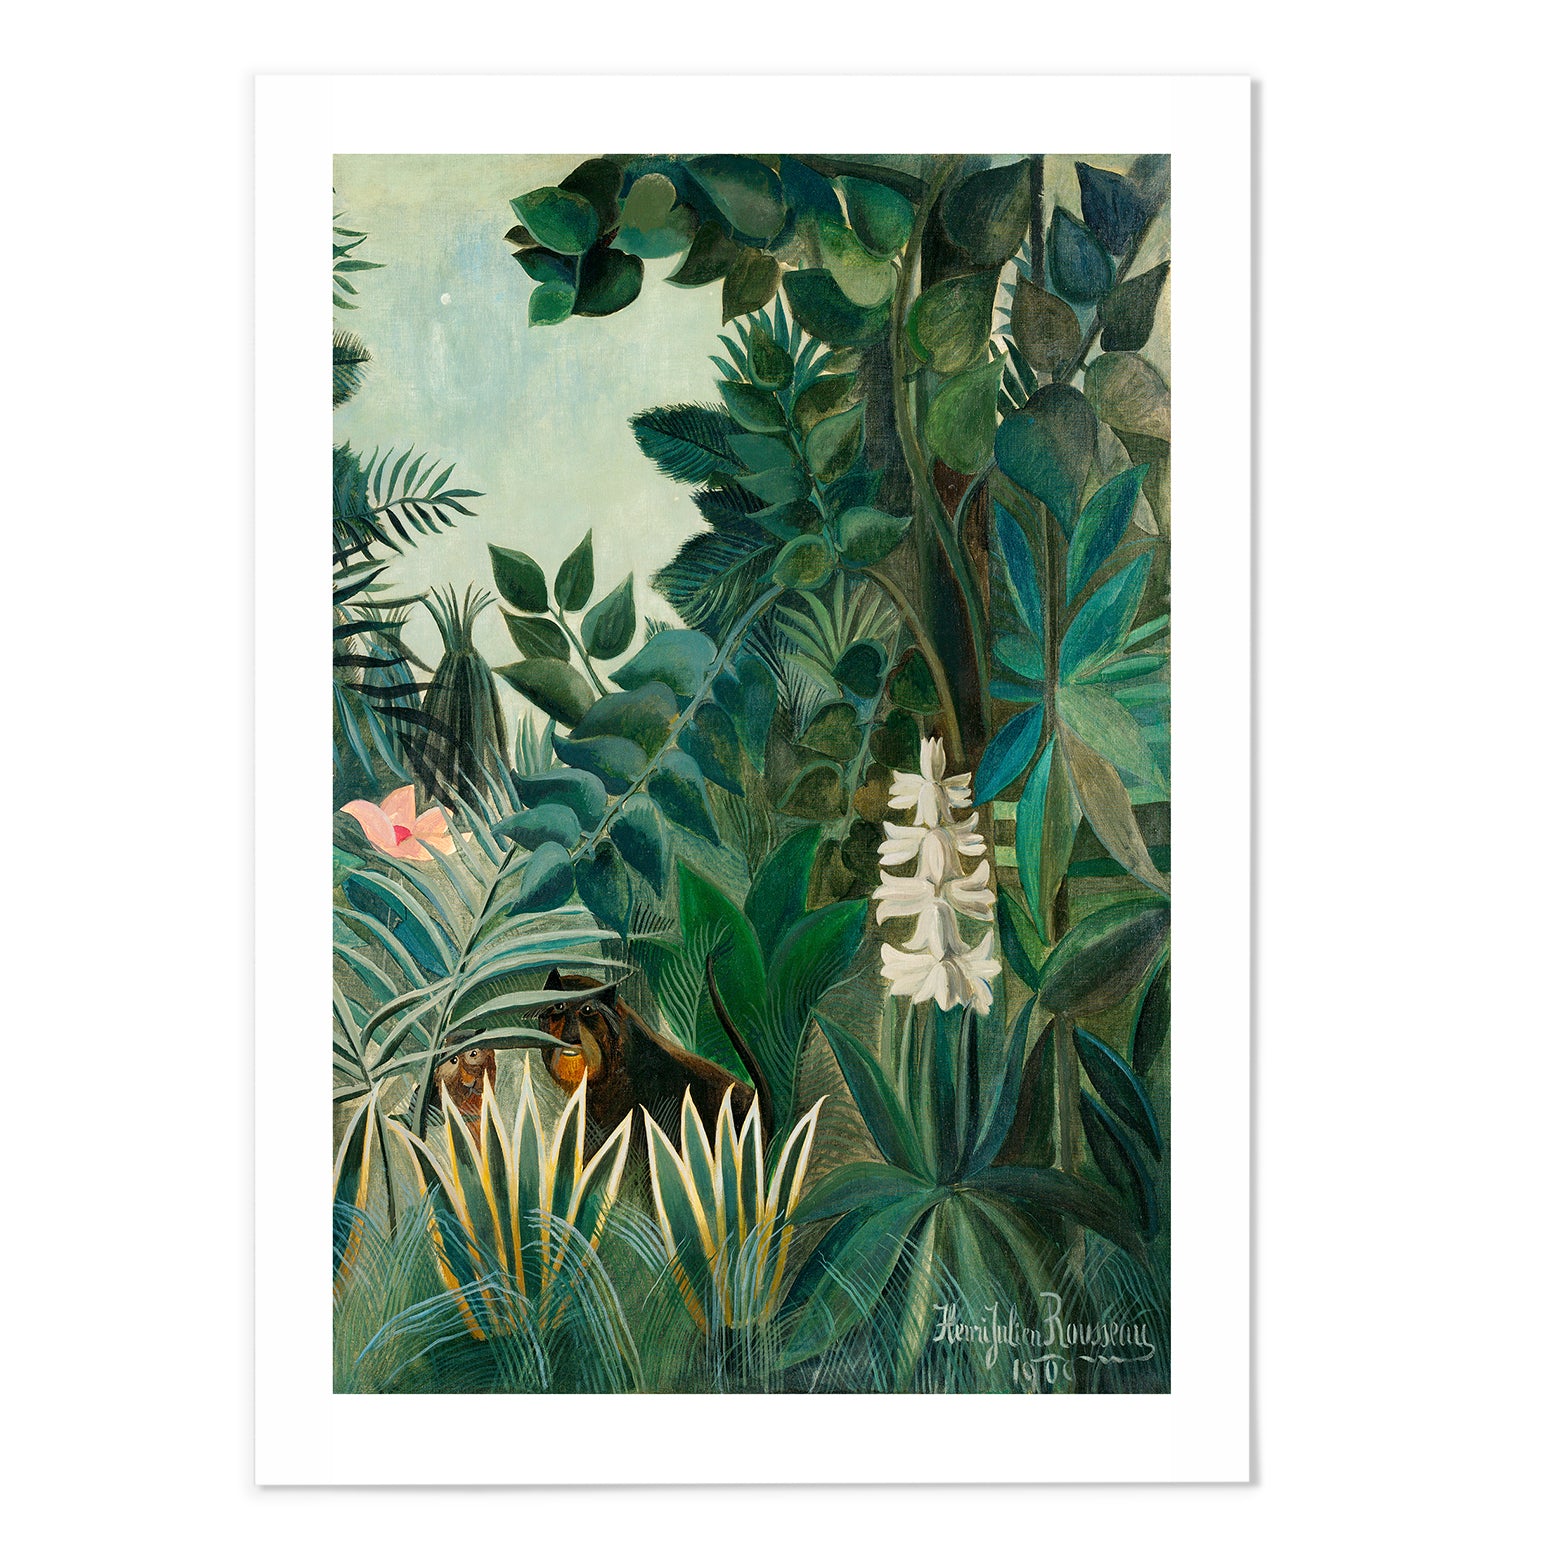 The Equatorial Jungle Henri Rousseau Art Print